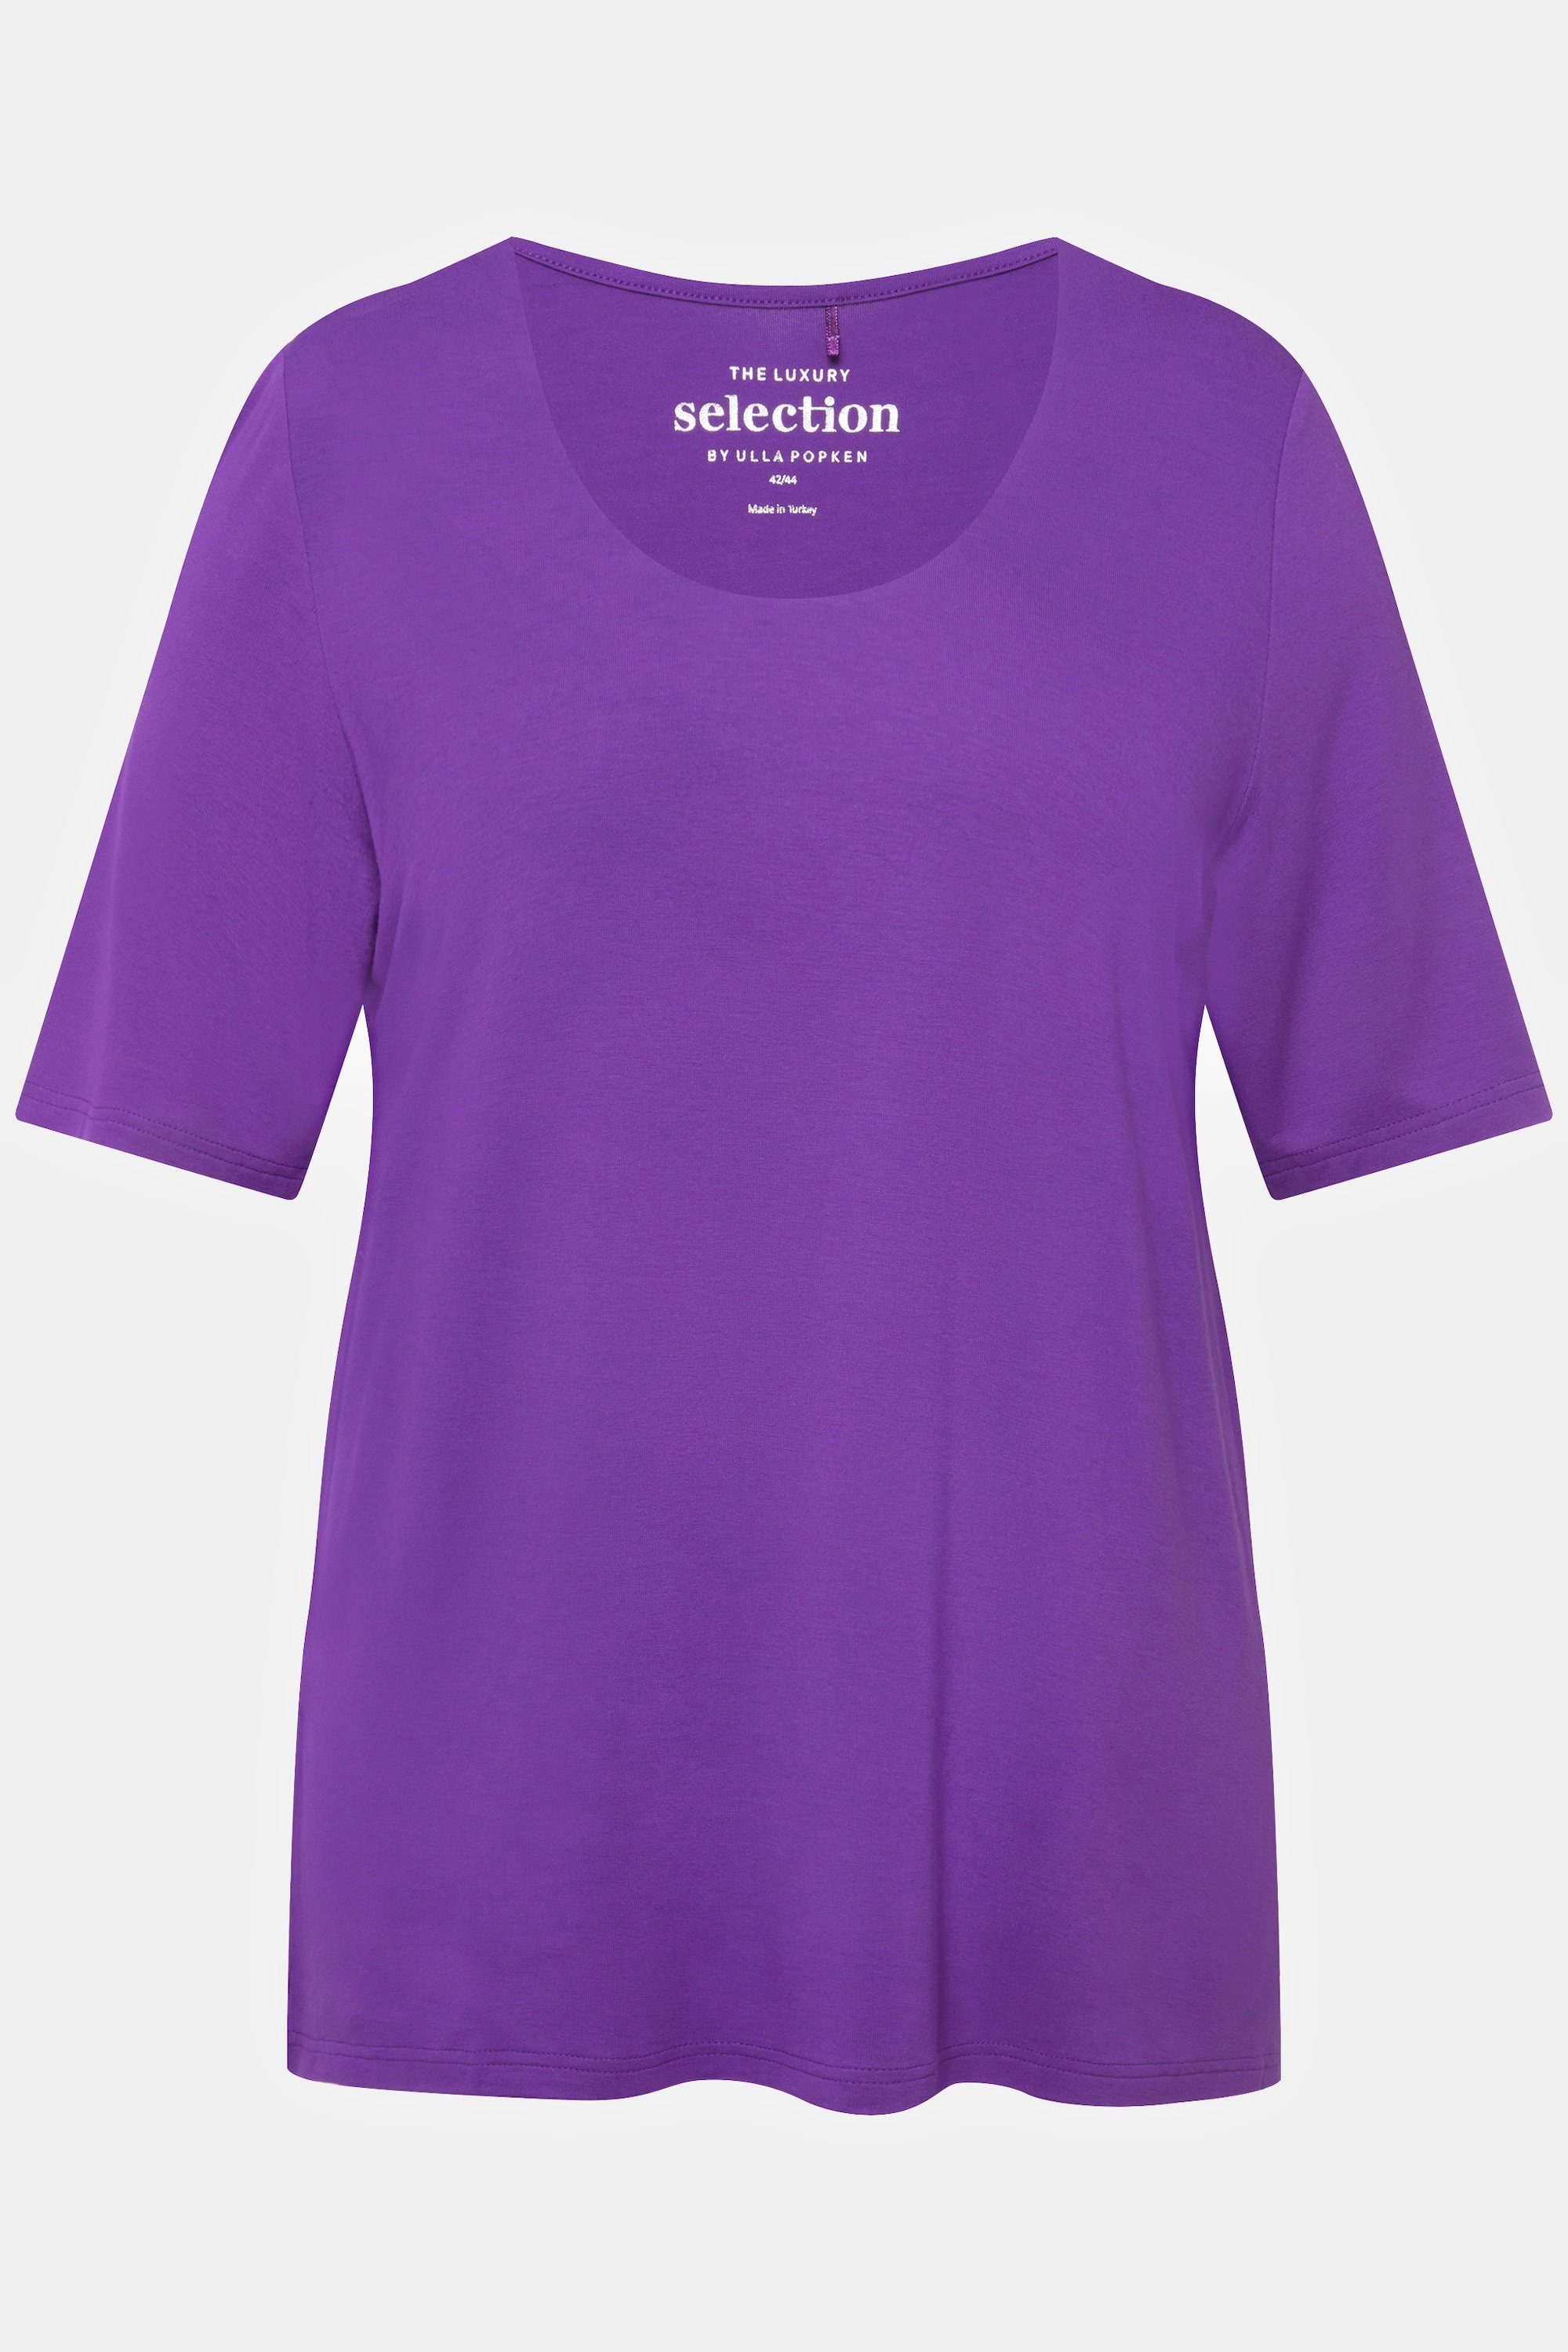 Popken T-Shirt Ulla Rundhalsshirt violett vorne Halbarm V-Ausschnitt doppellagig